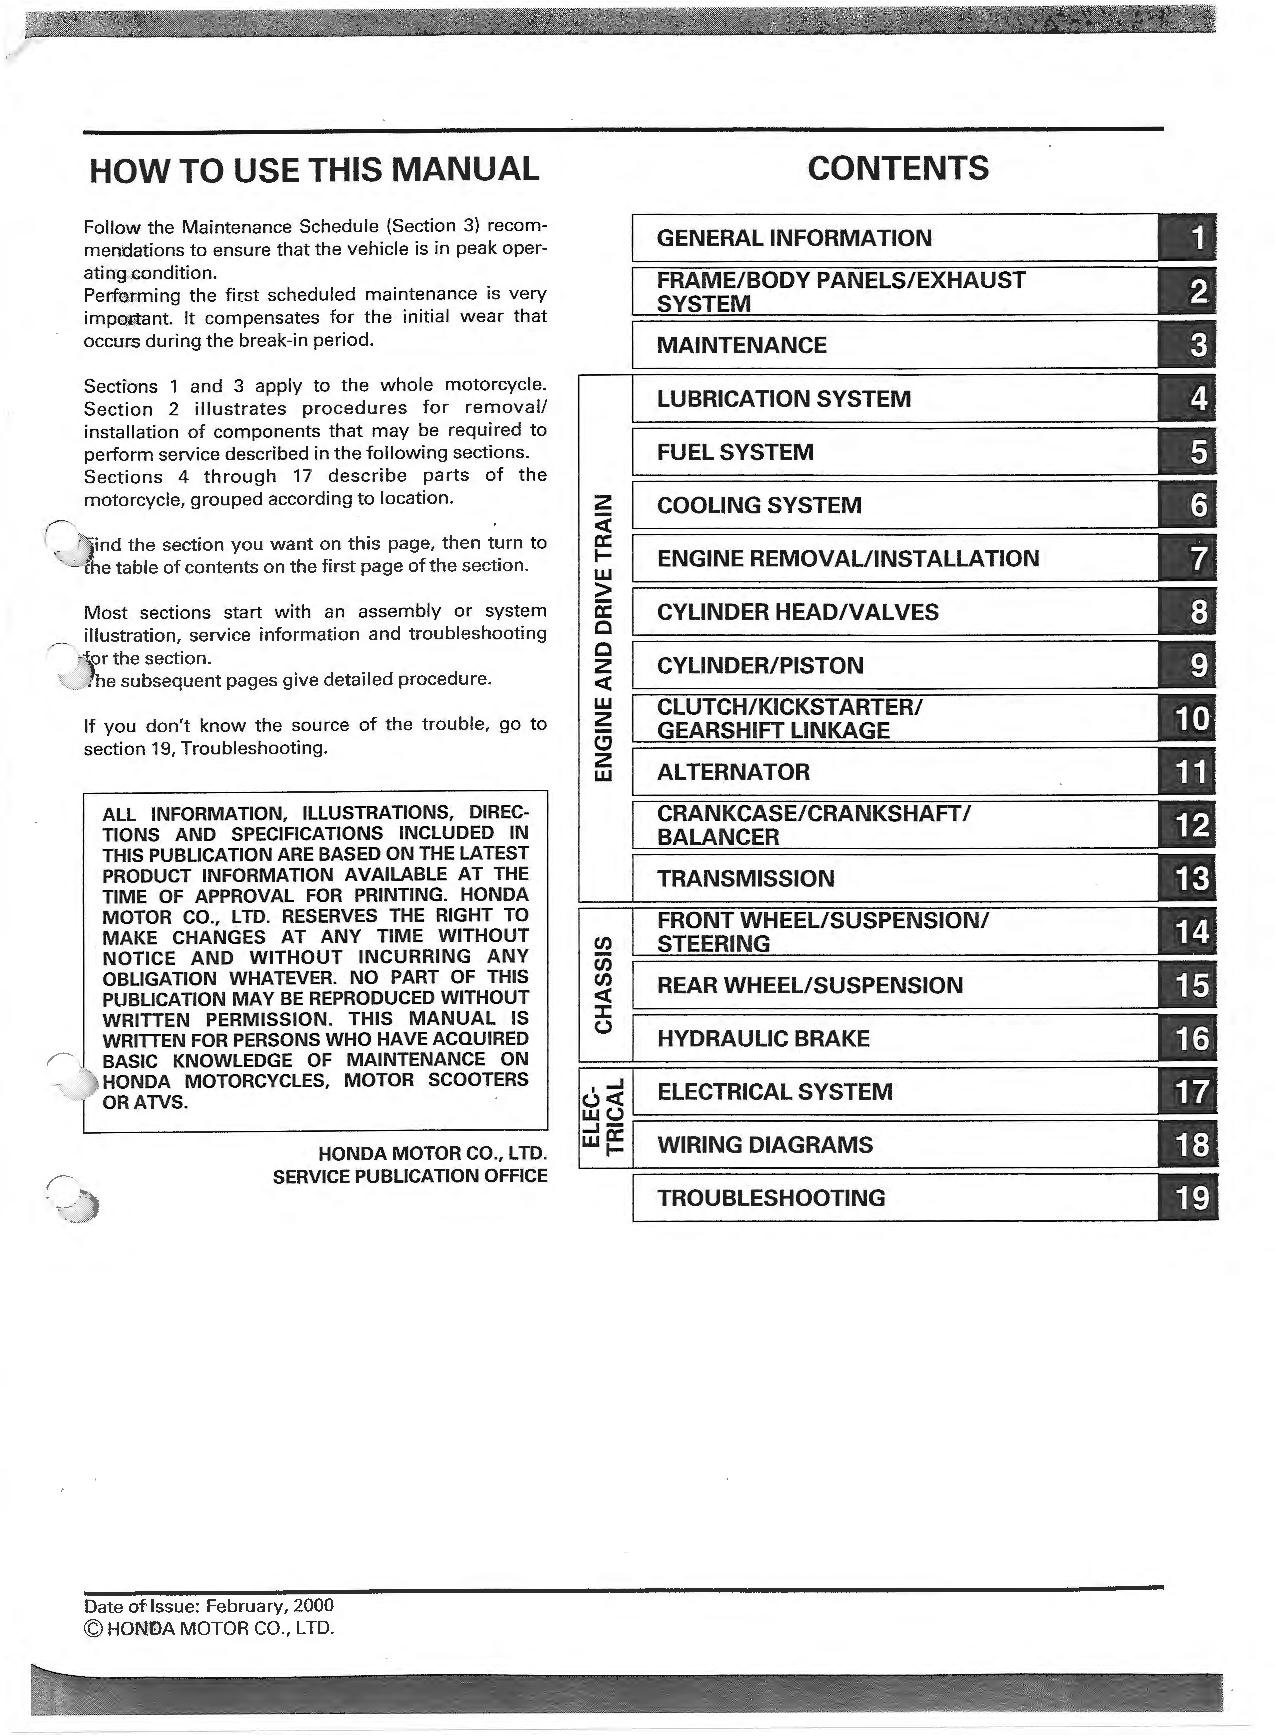 File:Honda XR650R service manual.pdf